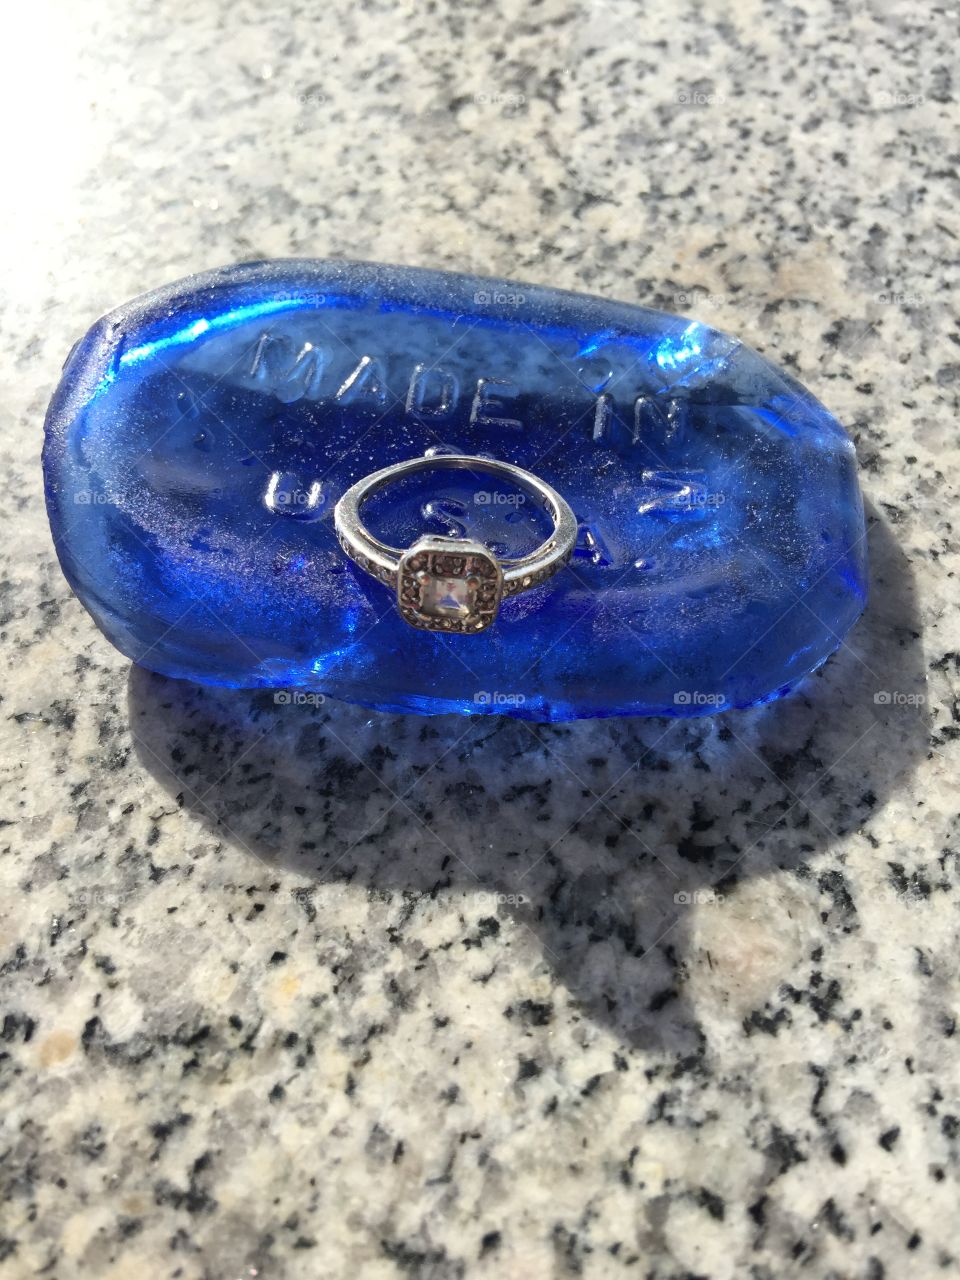 Cobalt blue broken glass and my birthstone aquamarine my fav color 